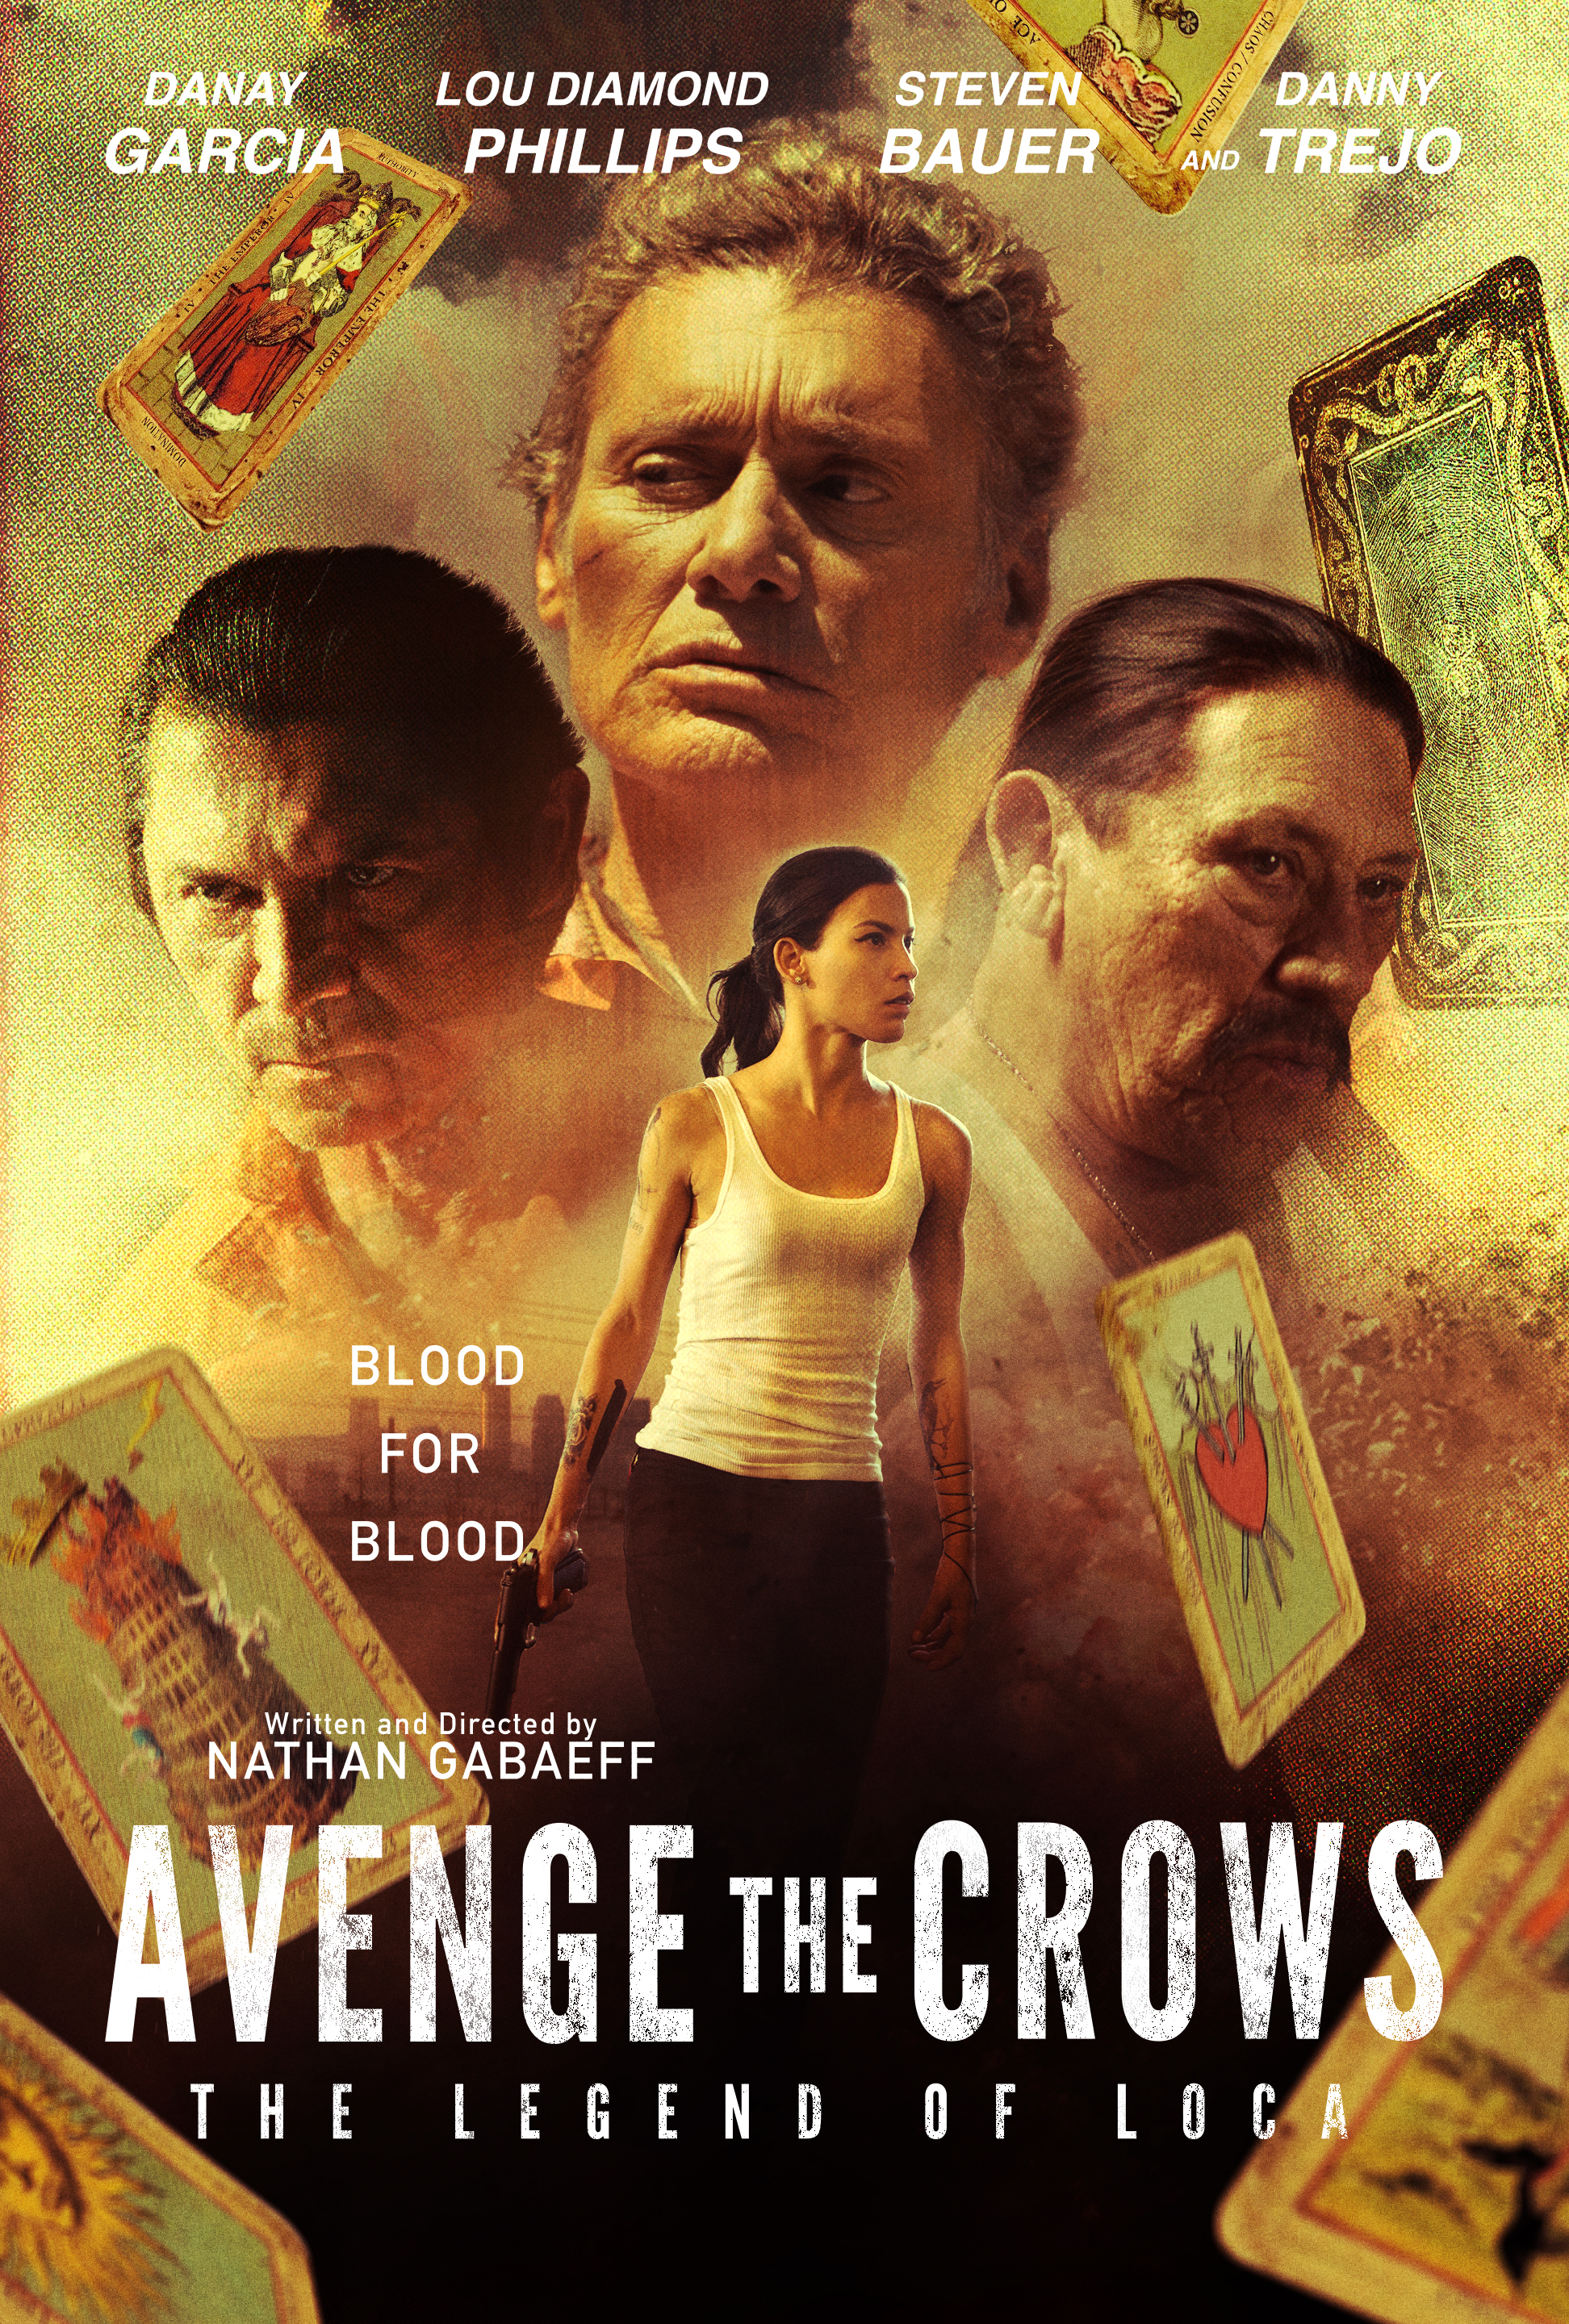 Nonton film Avenge the Crows layarkaca21 indoxx1 ganool online streaming terbaru